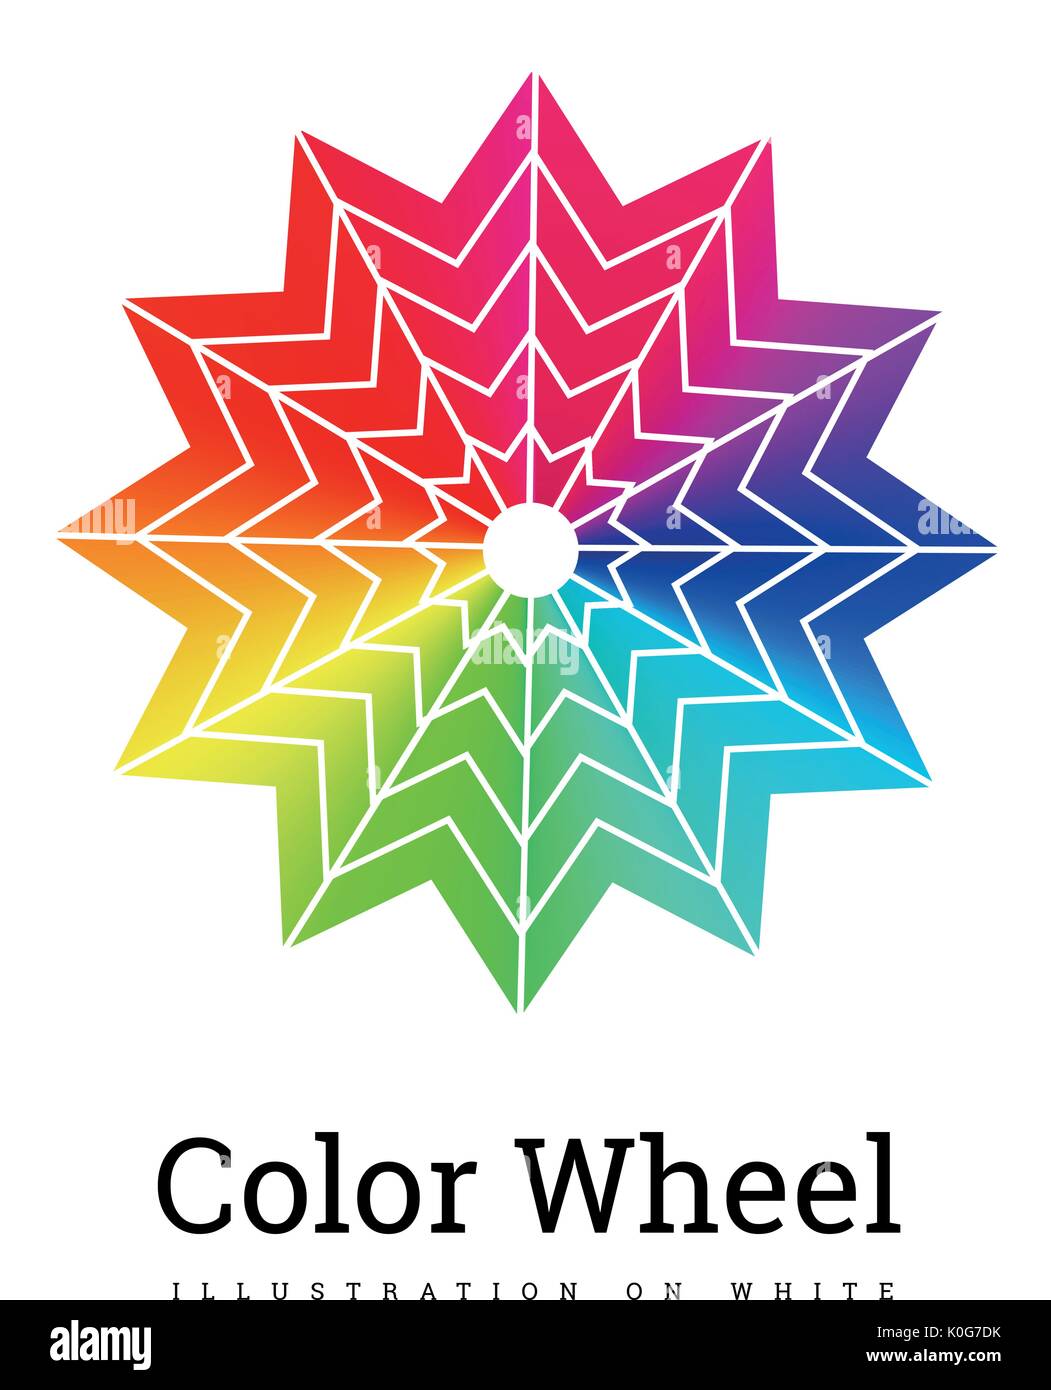 Color Wheel vector illustration Stock Vector